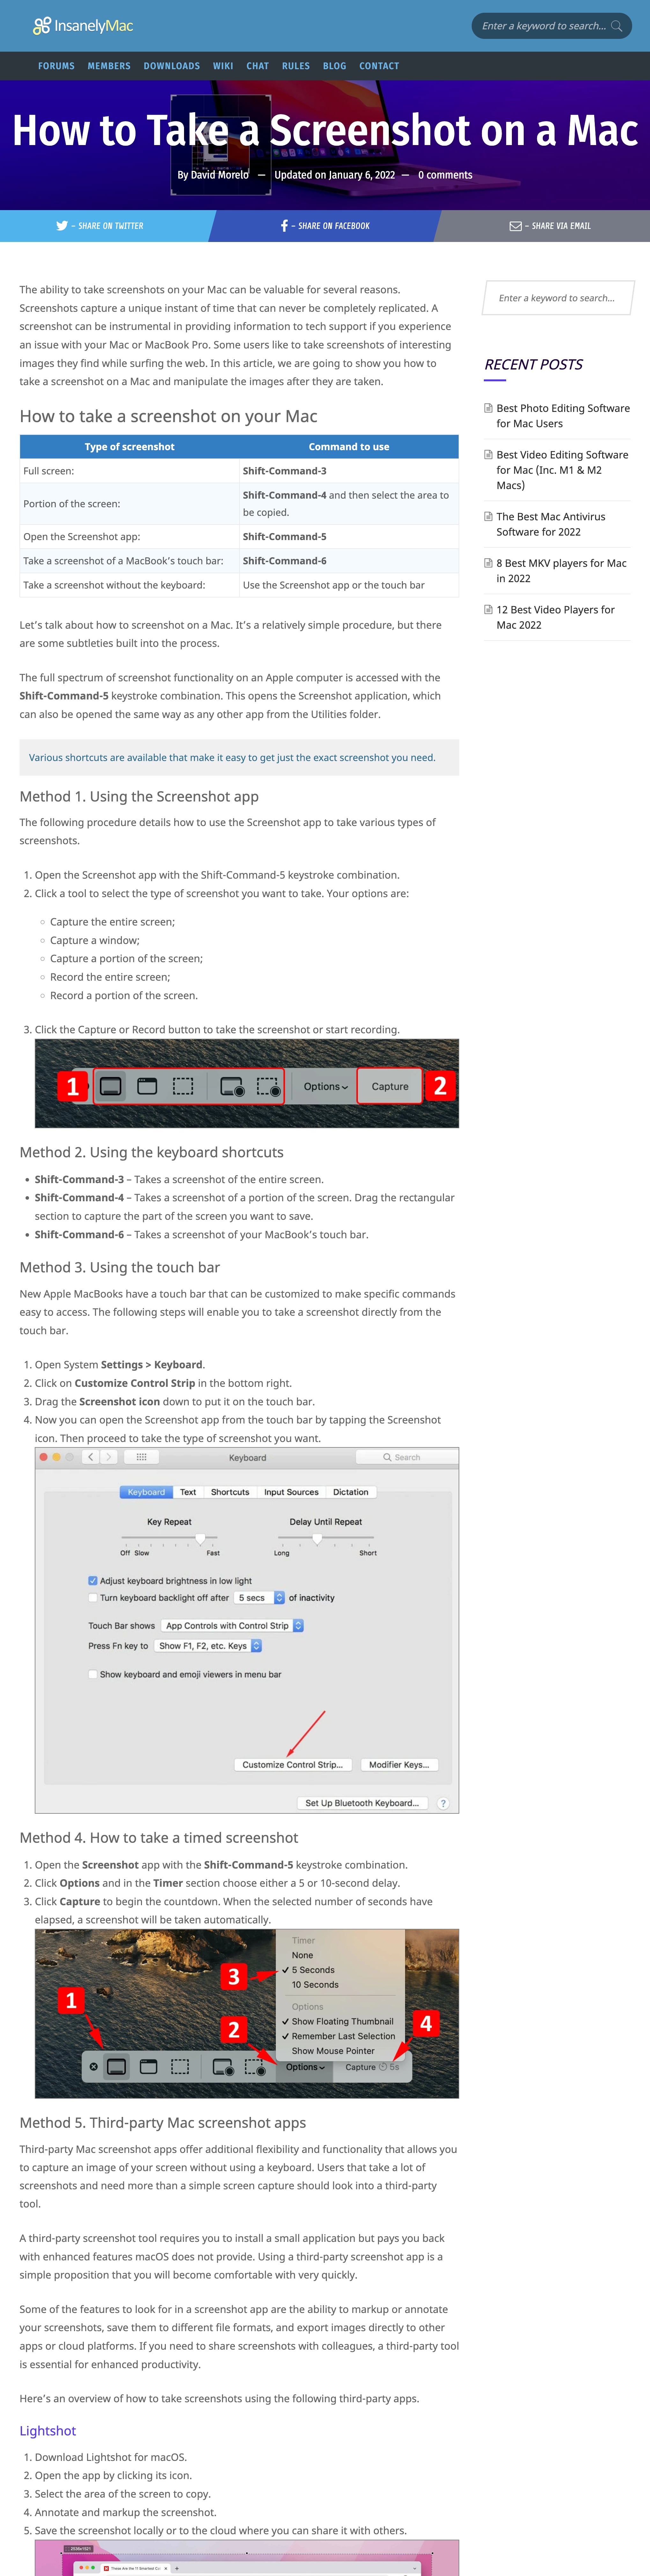 How to Take a Screenshot on a Mac